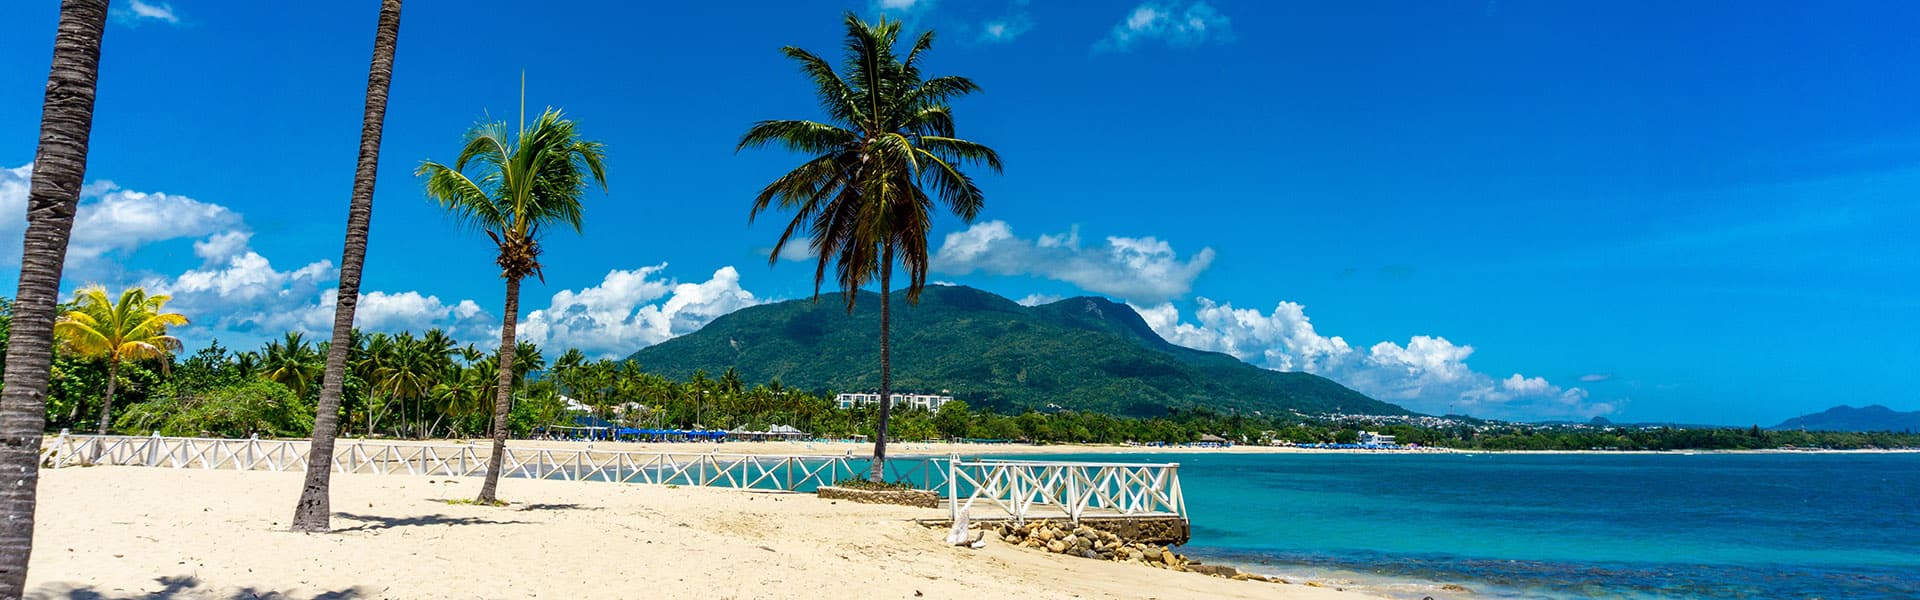 Caribbean: Great Stirrup Cay & Dominican Republic